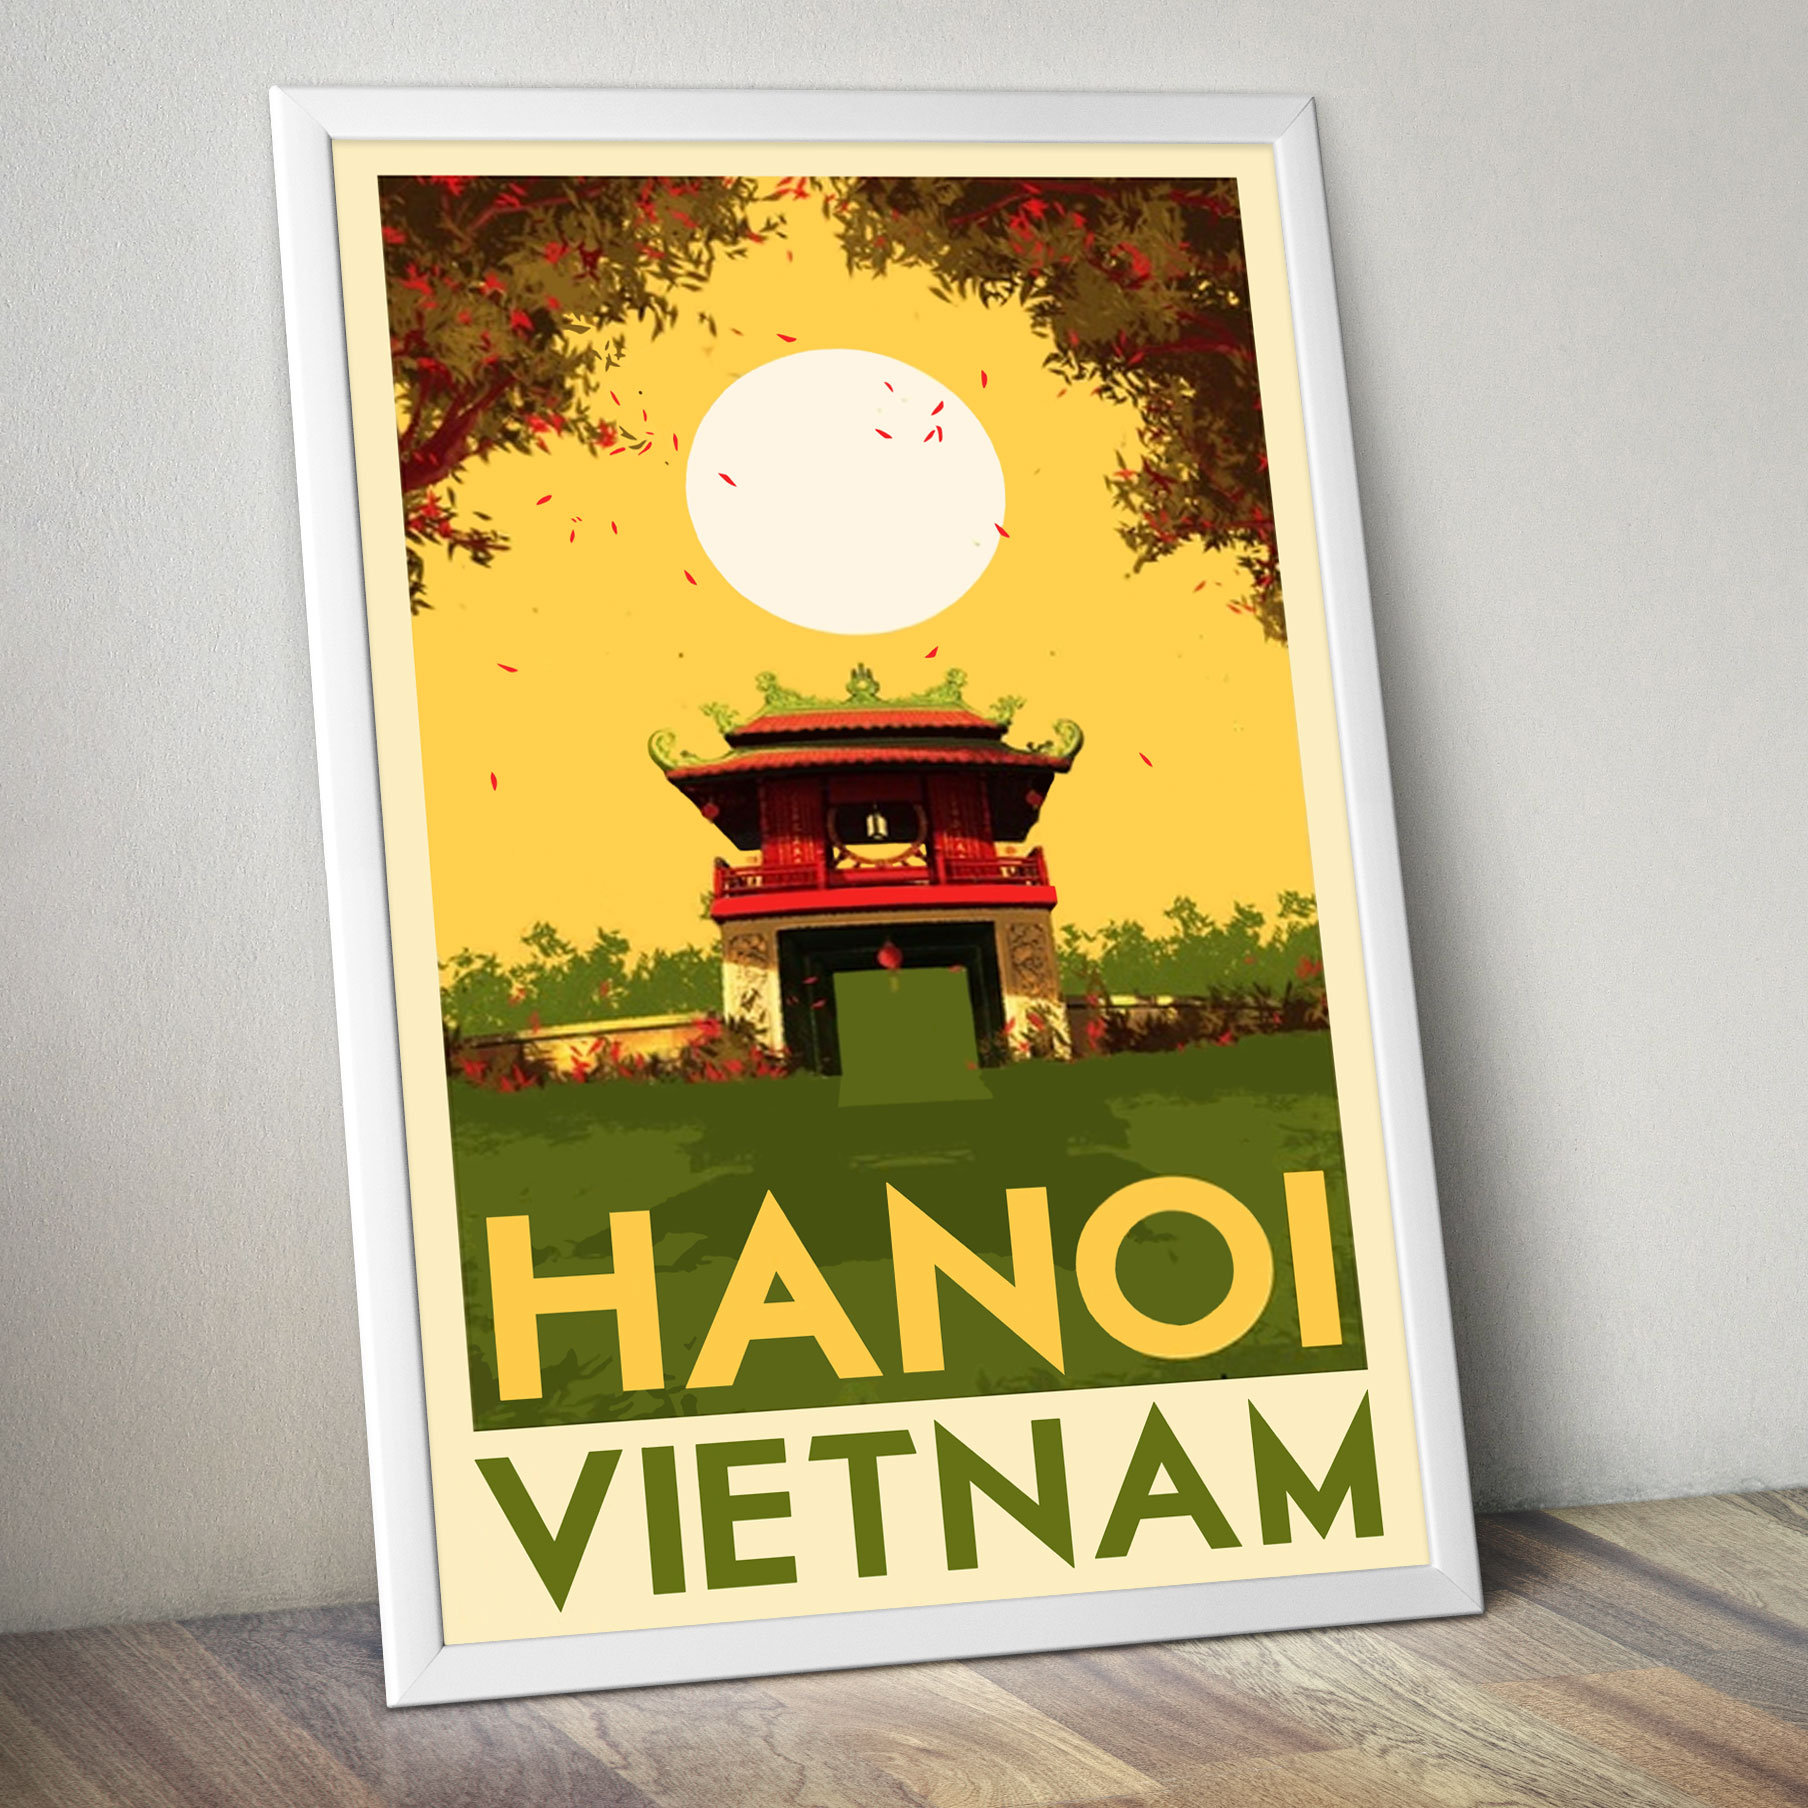 Hanoi Vietnam Vintage Poster Travel Photo Fridge Magnet 2"x 3" Collectible 